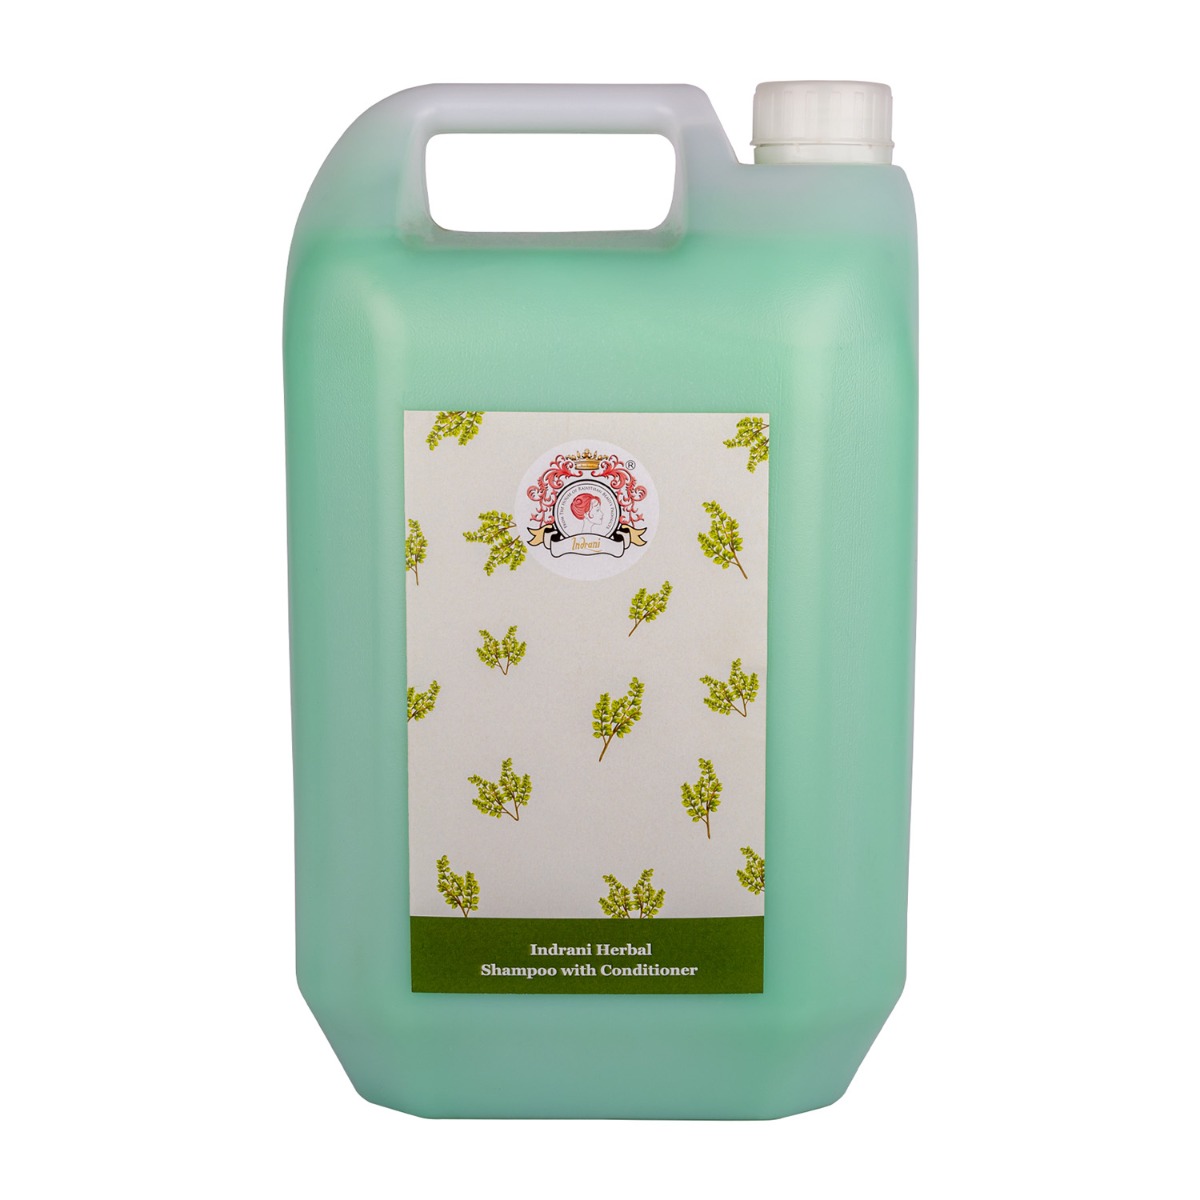 Indrani Herbal Shampoo, 5ltr